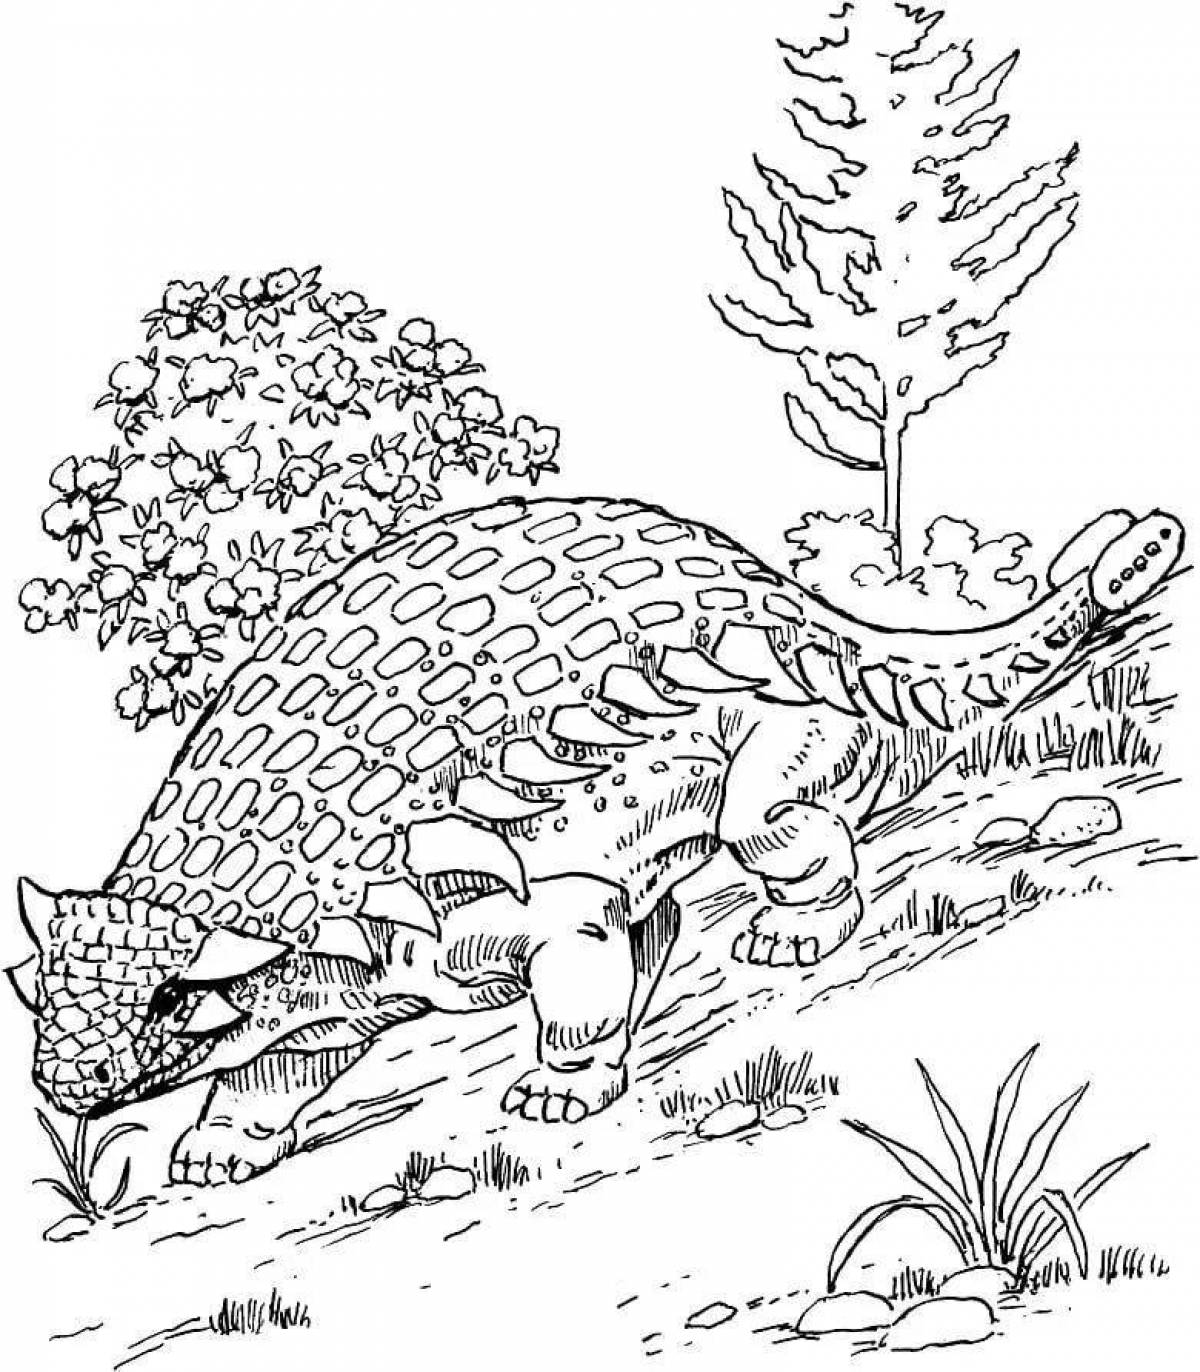 Sweet ankylosaurus coloring page